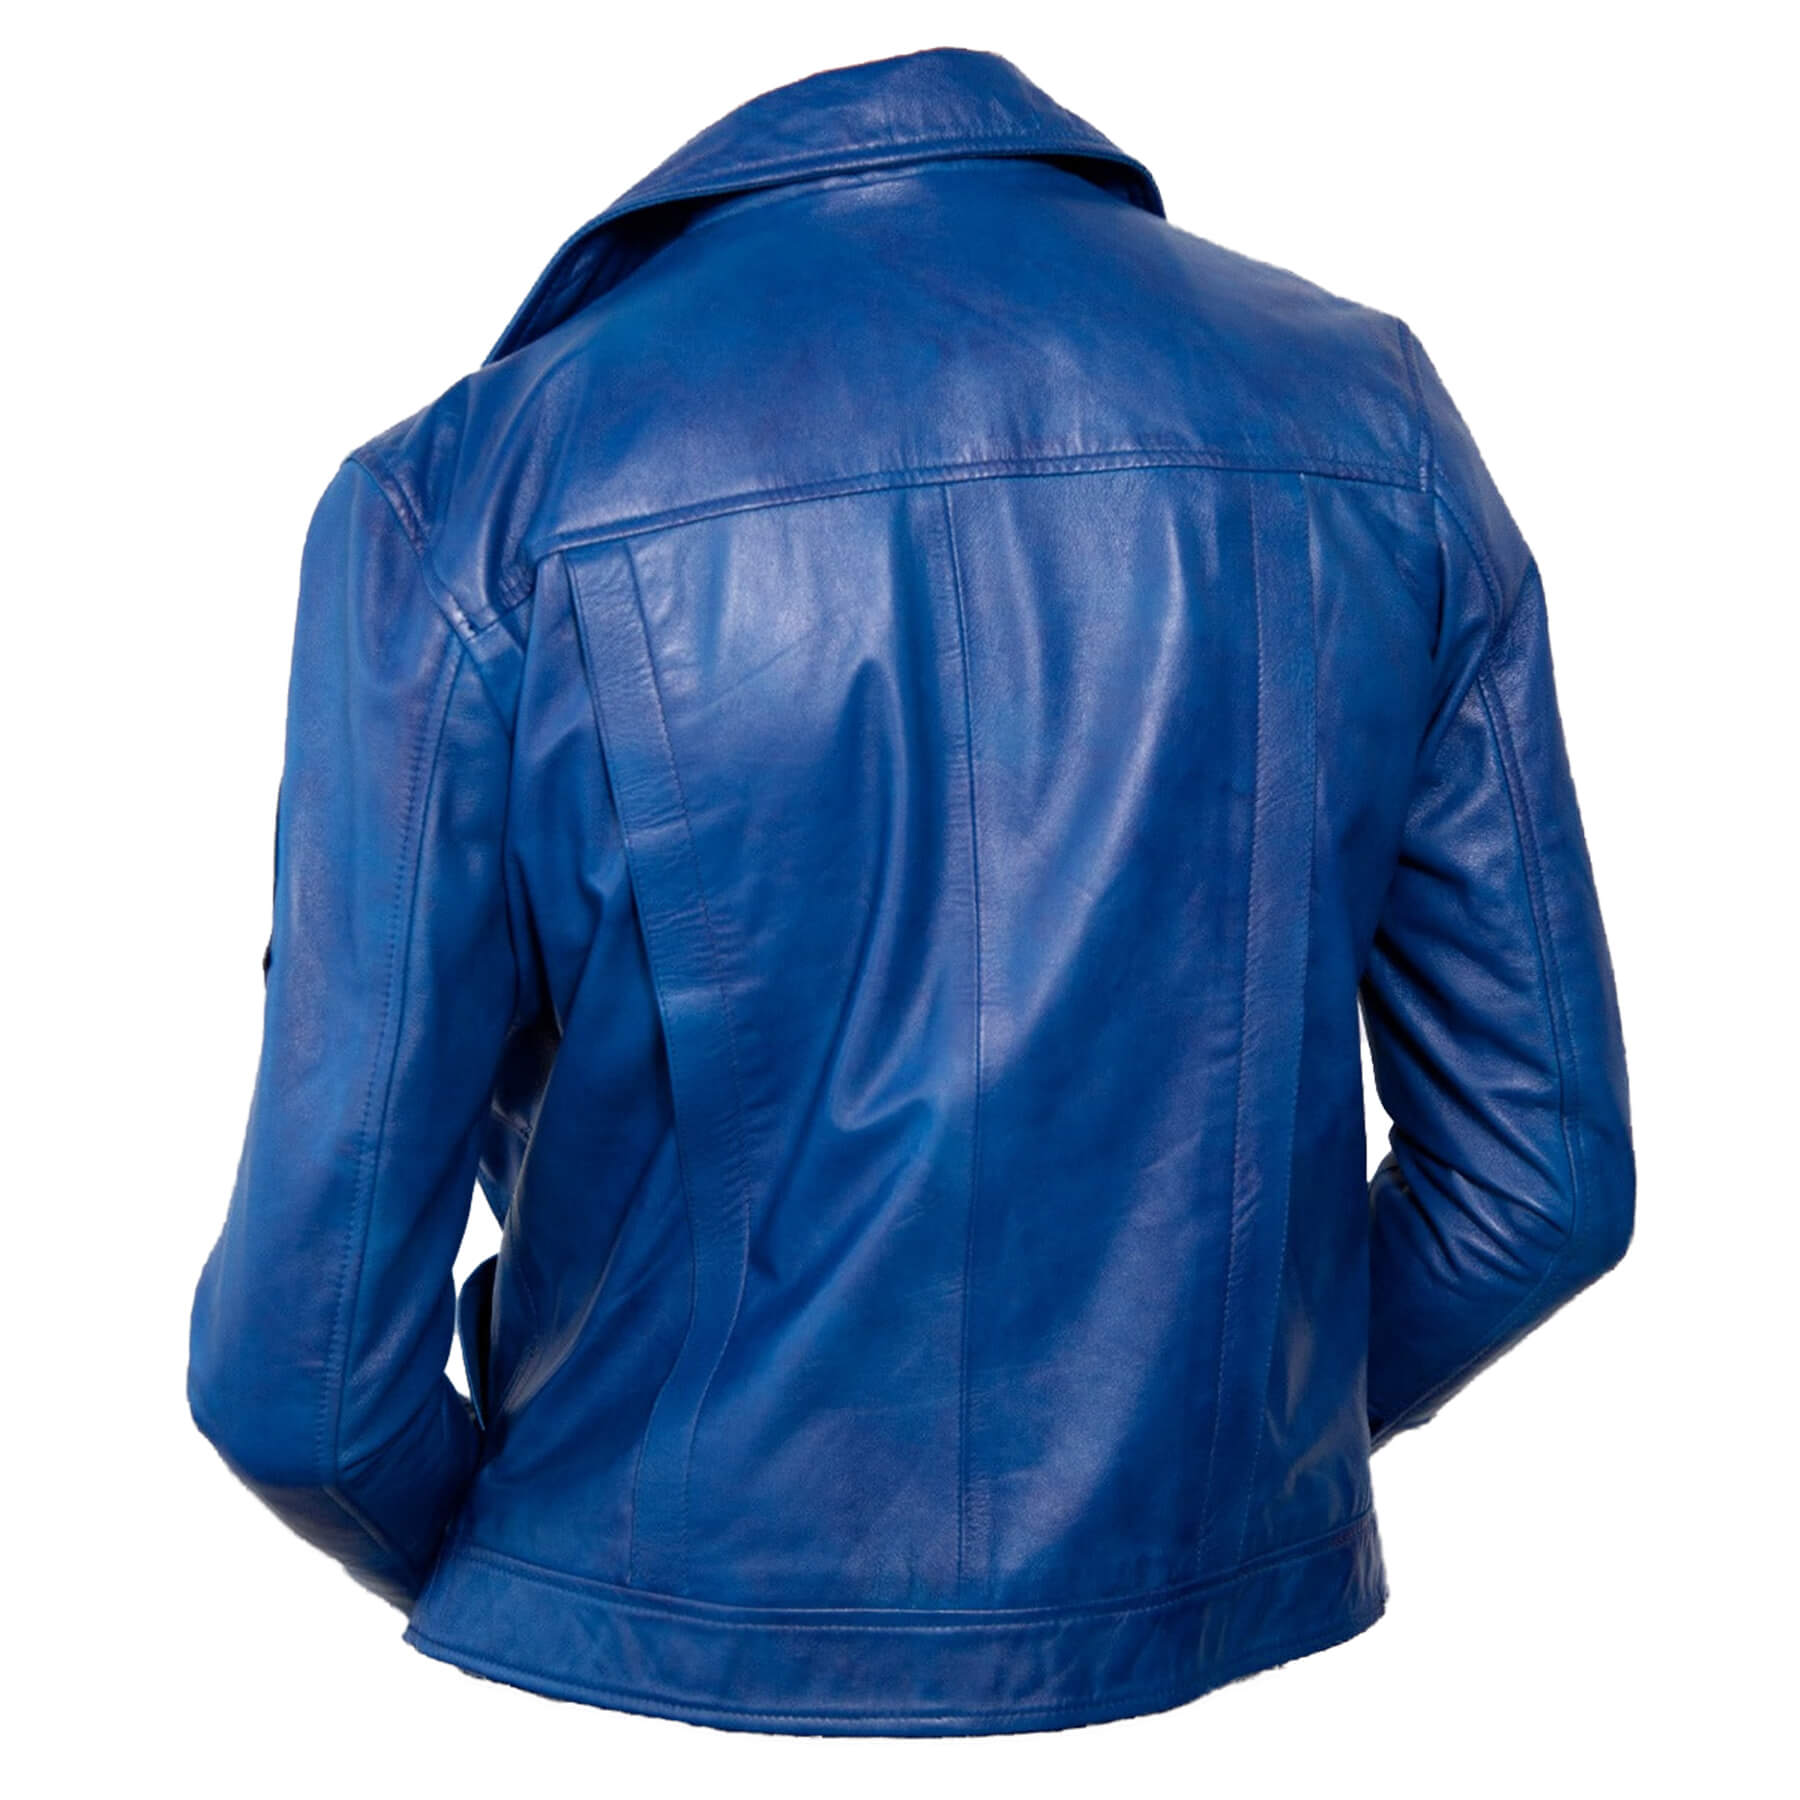 Blue Leather Capsule Corp Jacket